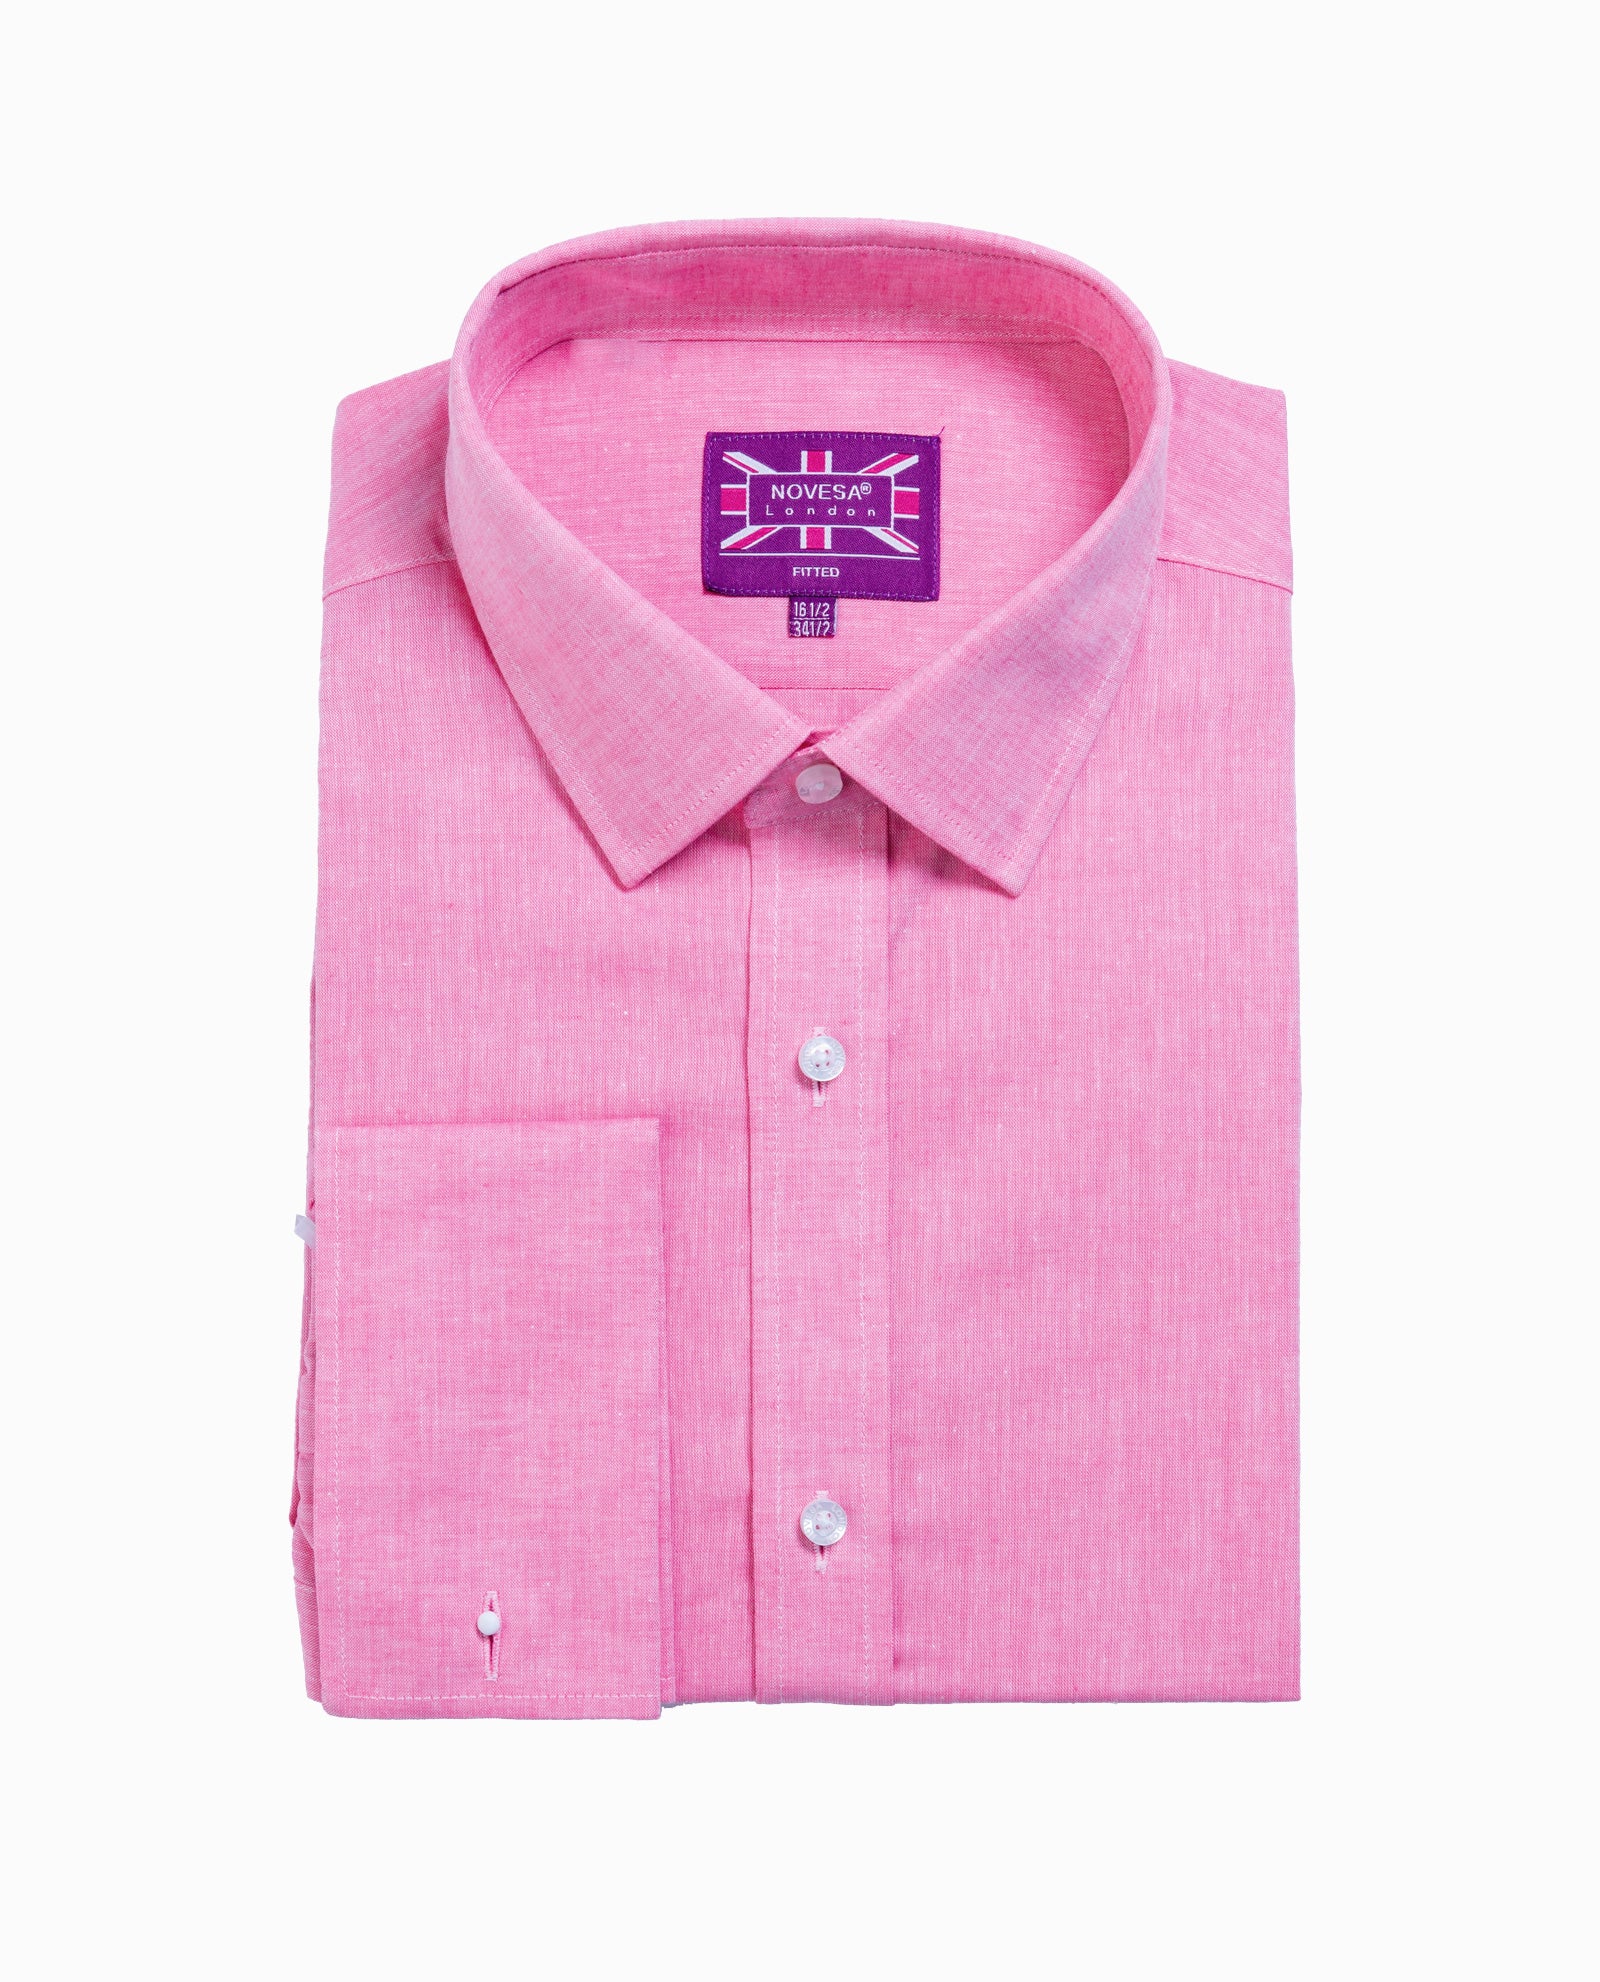 Sharp Pink Twill Mens Dress Shirt